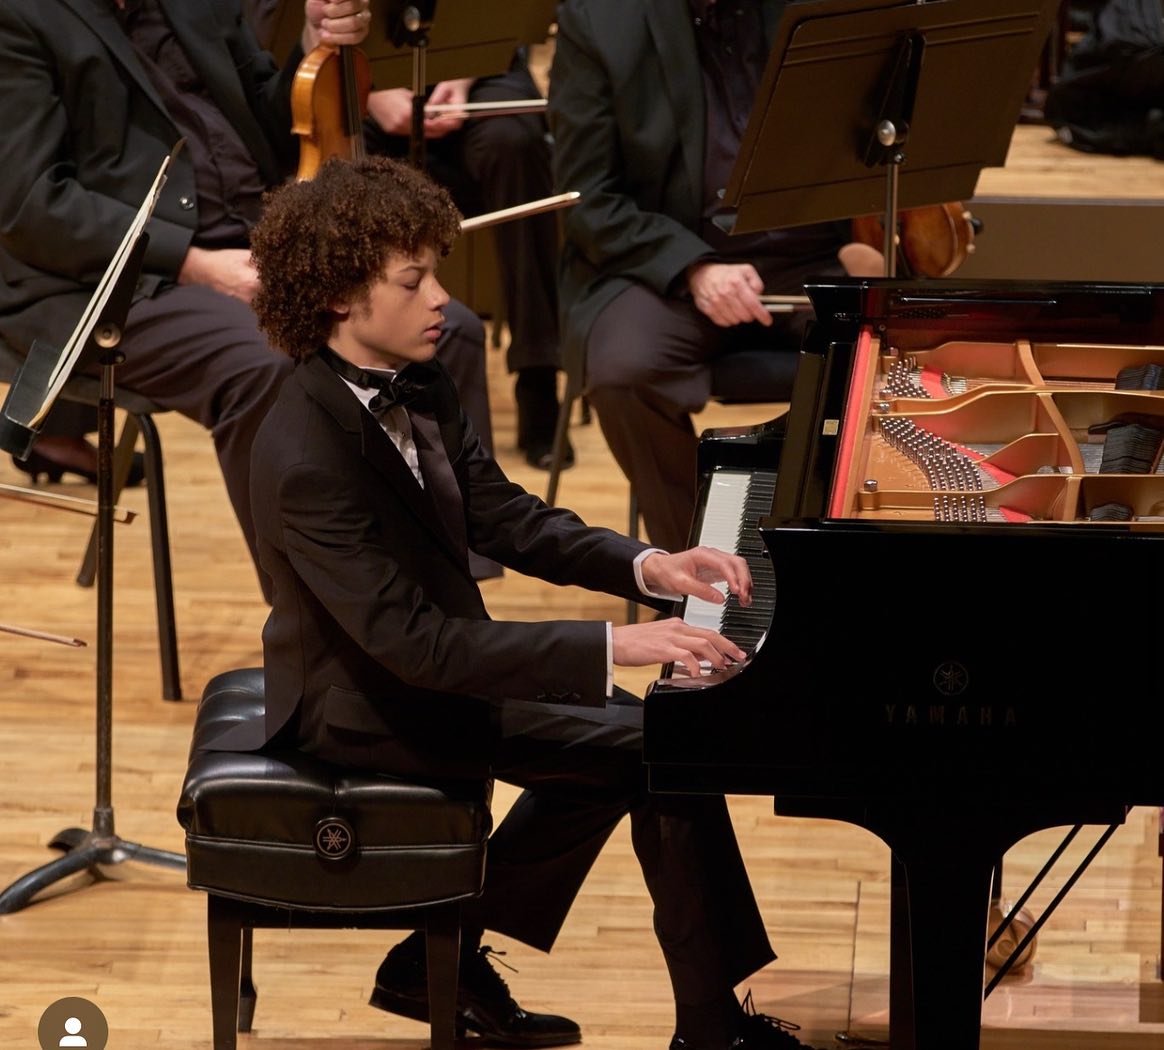 Pianist Kayden Kelly 25 dramatically playing Liszt on stage in Cincinnati.